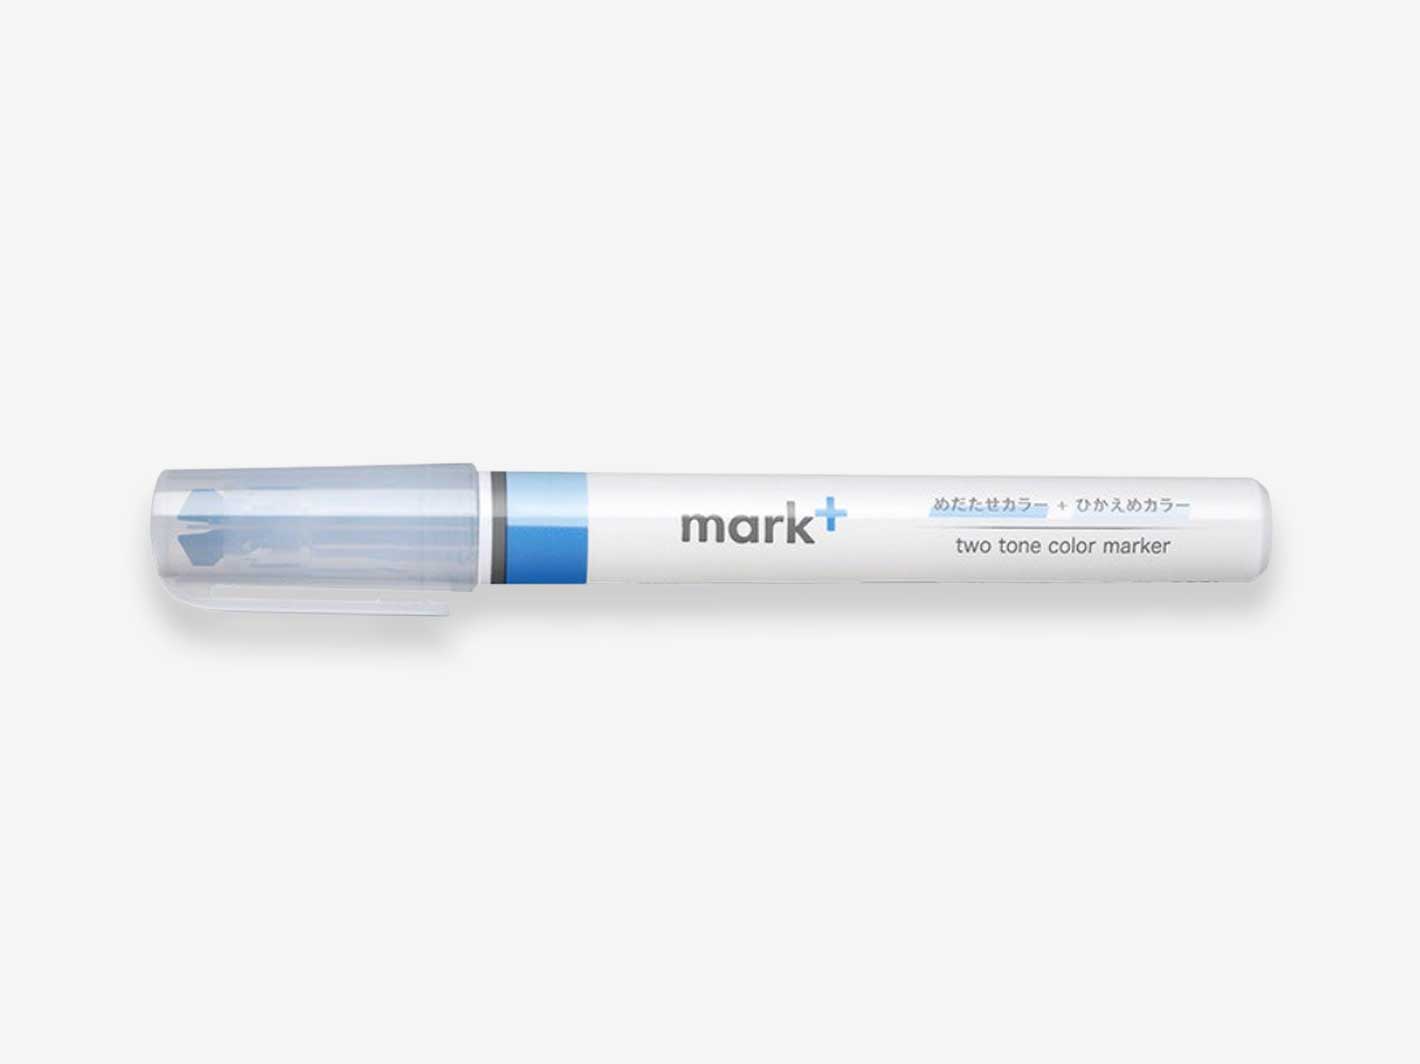 Mark+ 2 Tone Color Marking Pen - Blue